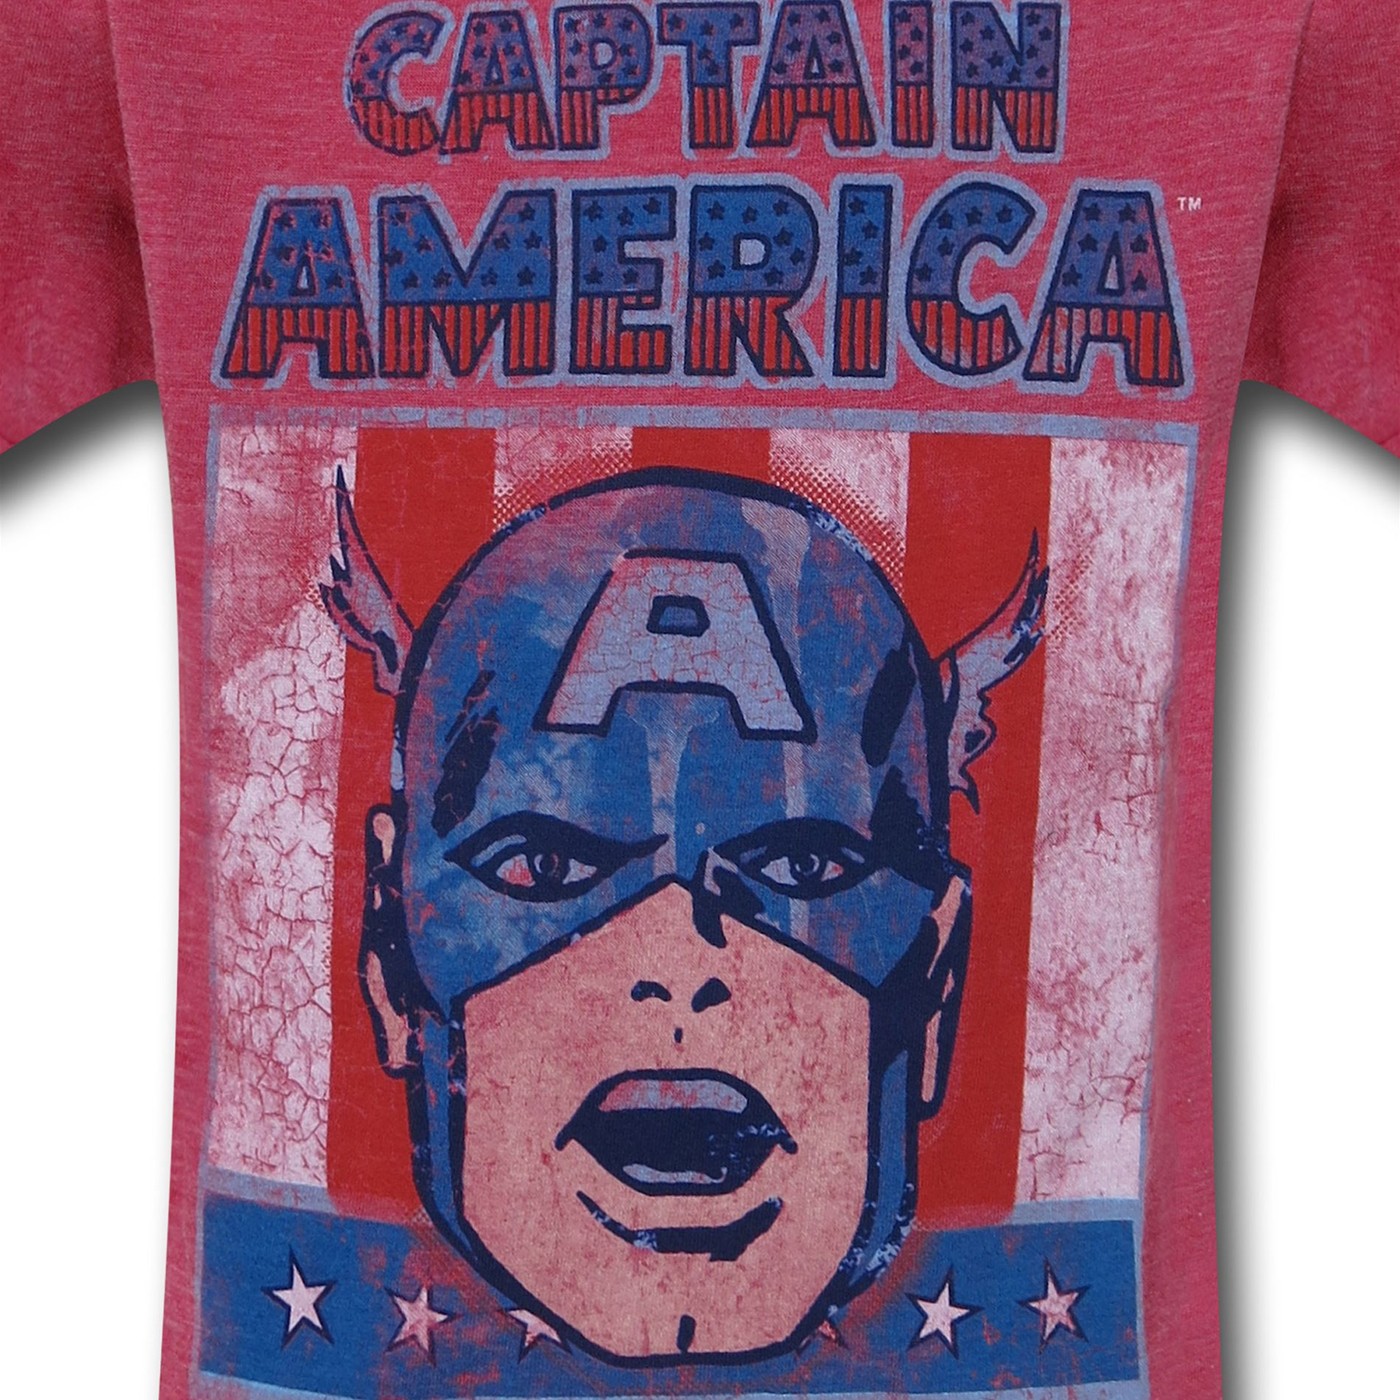 Captain America Stars & Stripes Red Kids T-Shirt